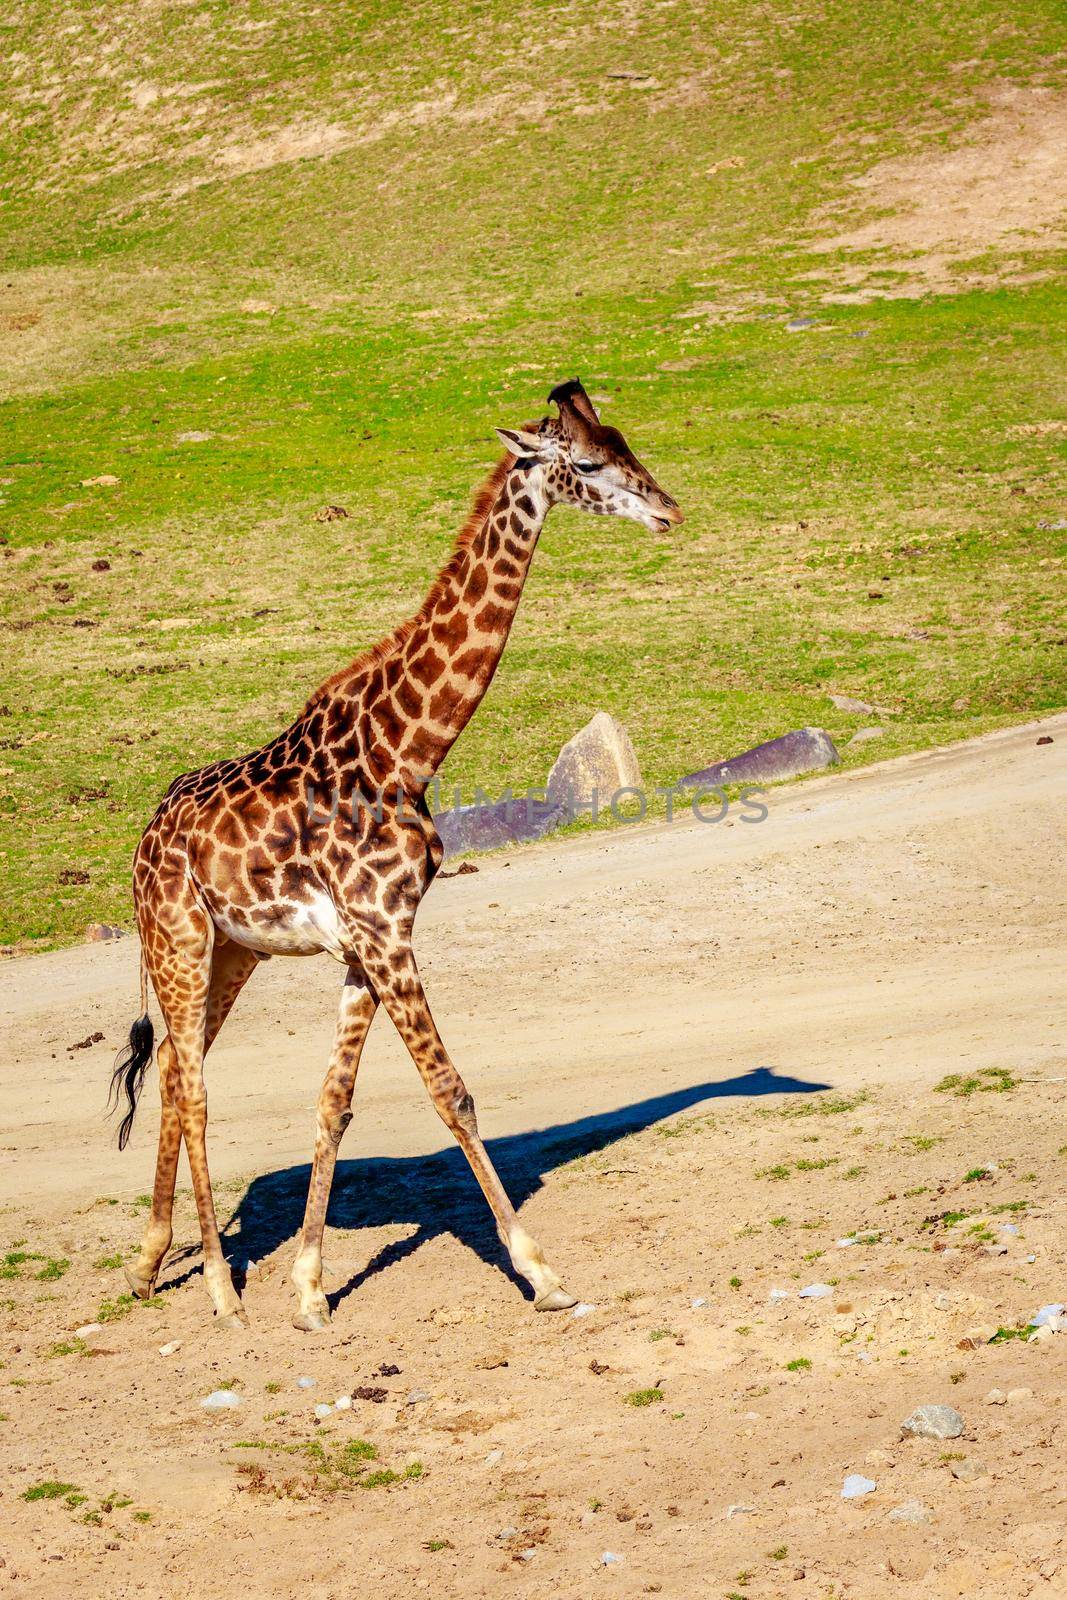 A Giraffe walking through the grasslands, under the harsh sunshine.